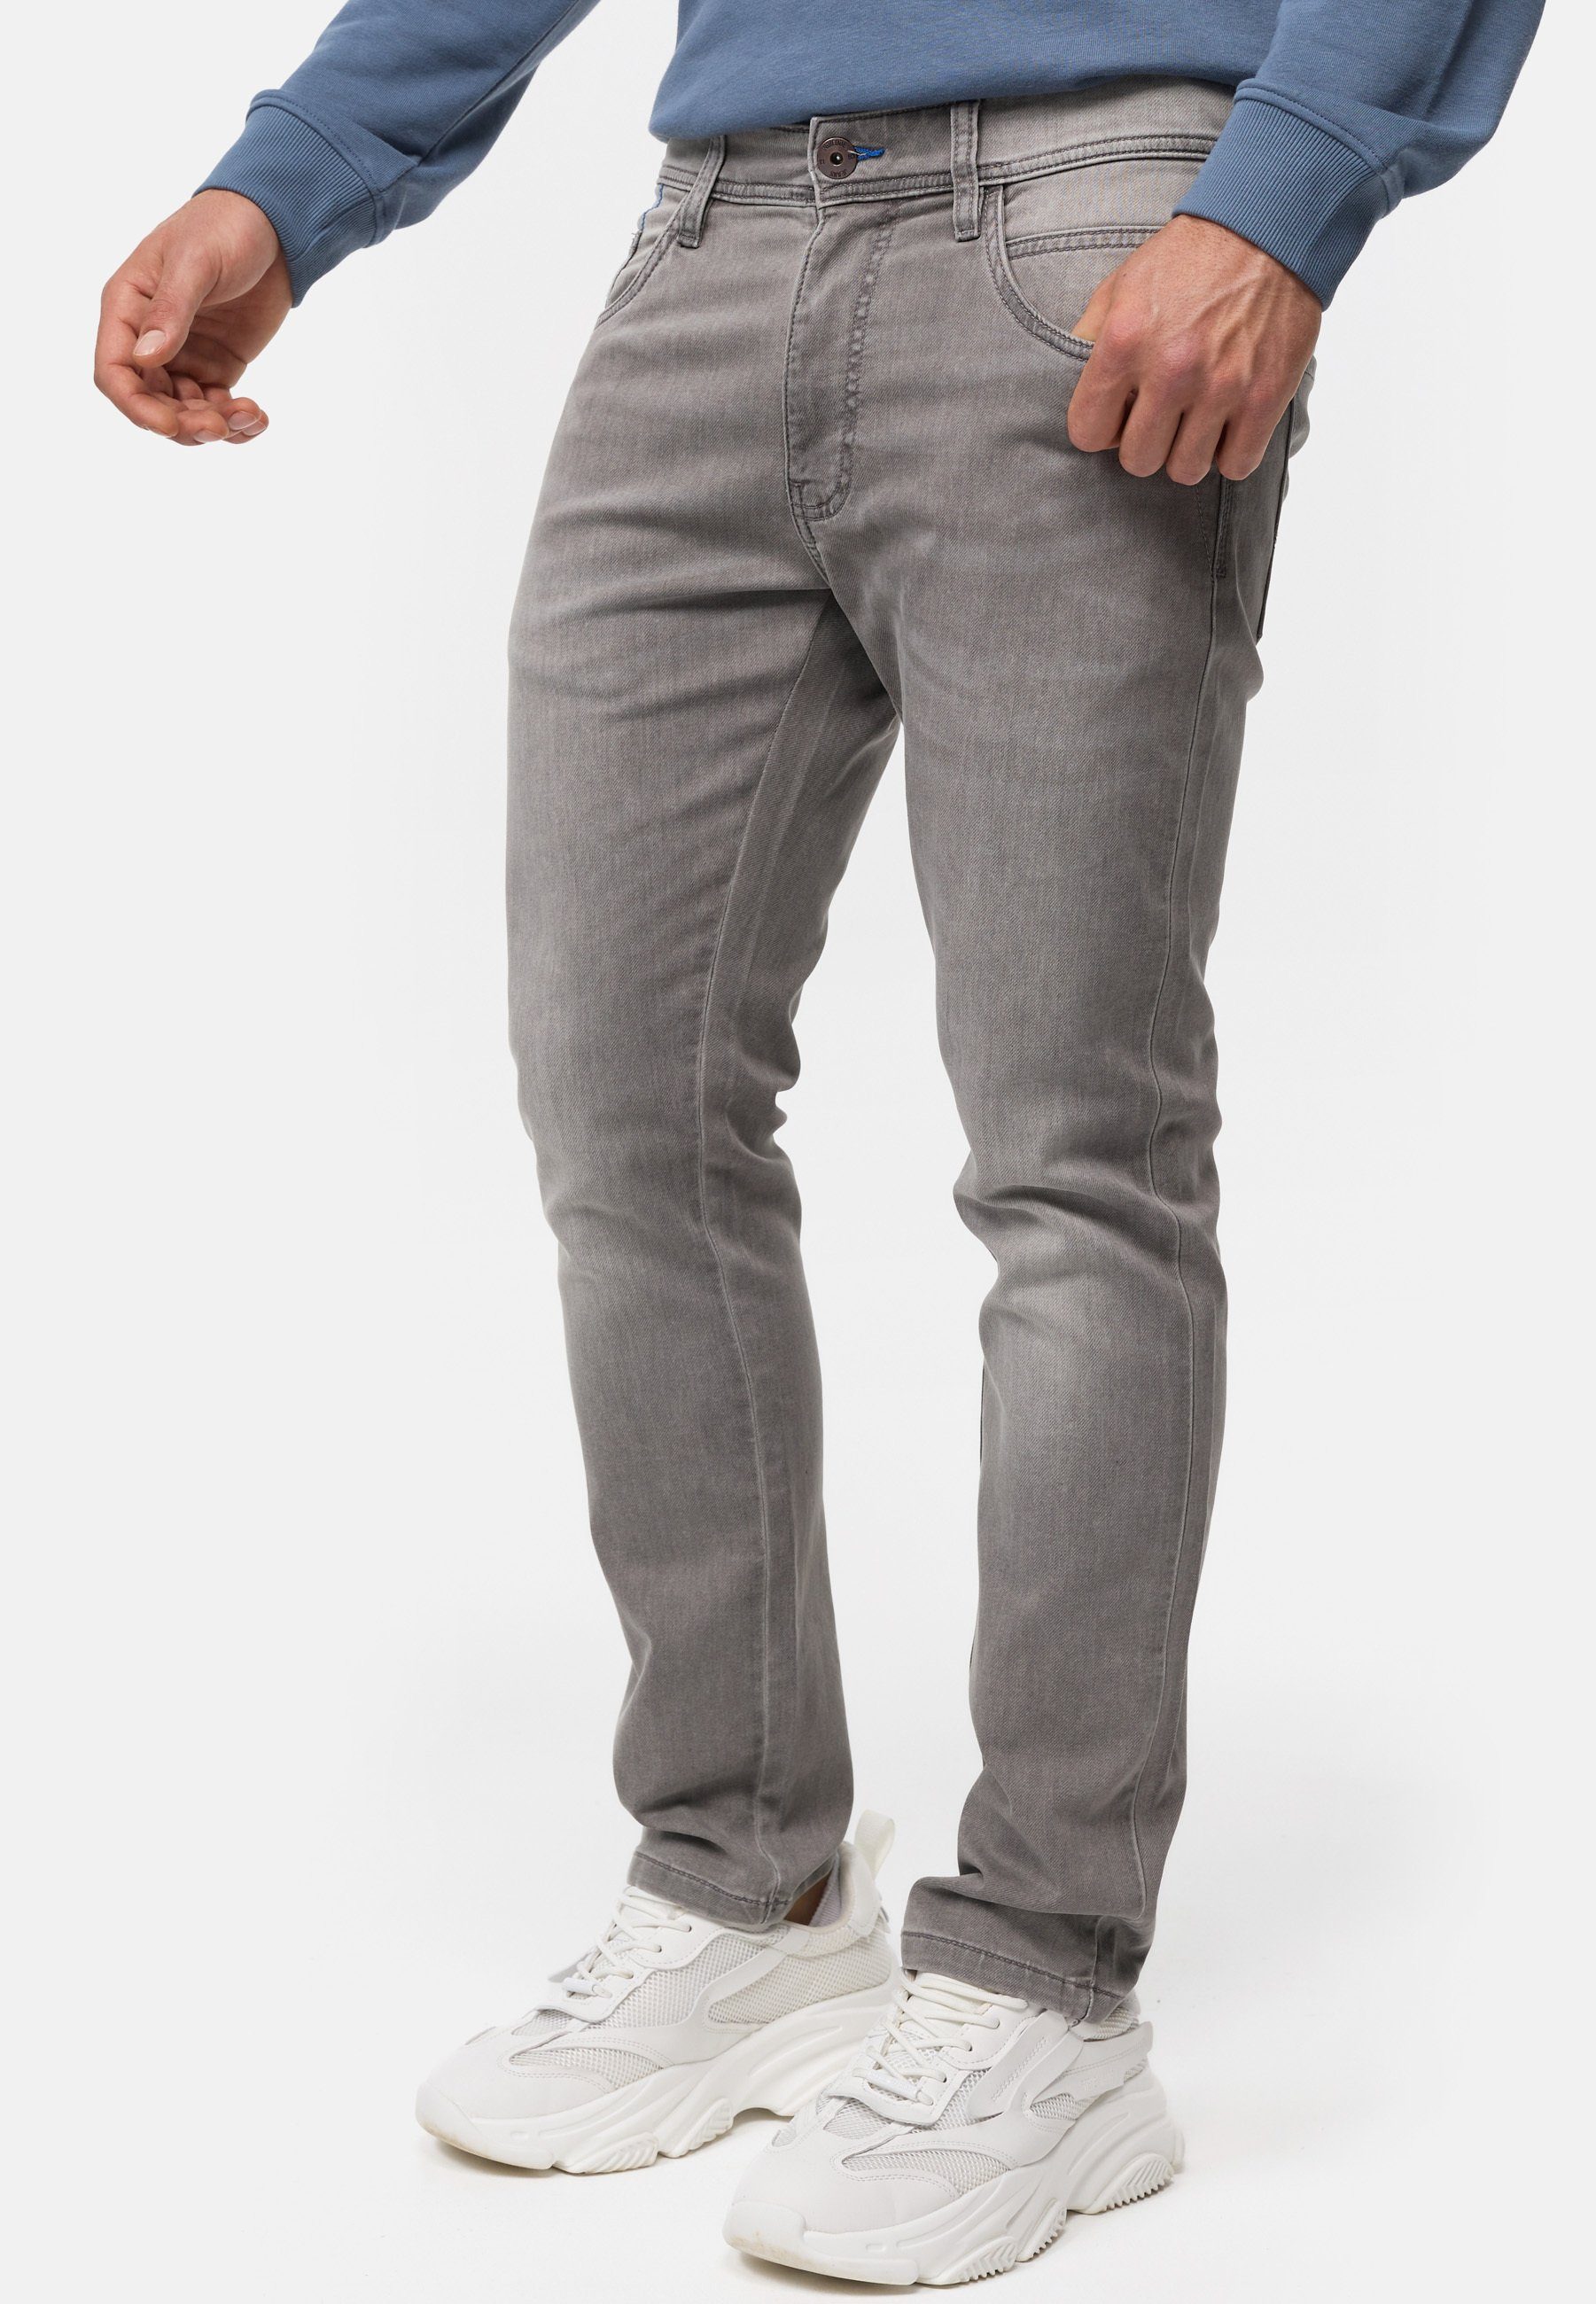 Pants Jogger Grey Indicode Vintage INCoil